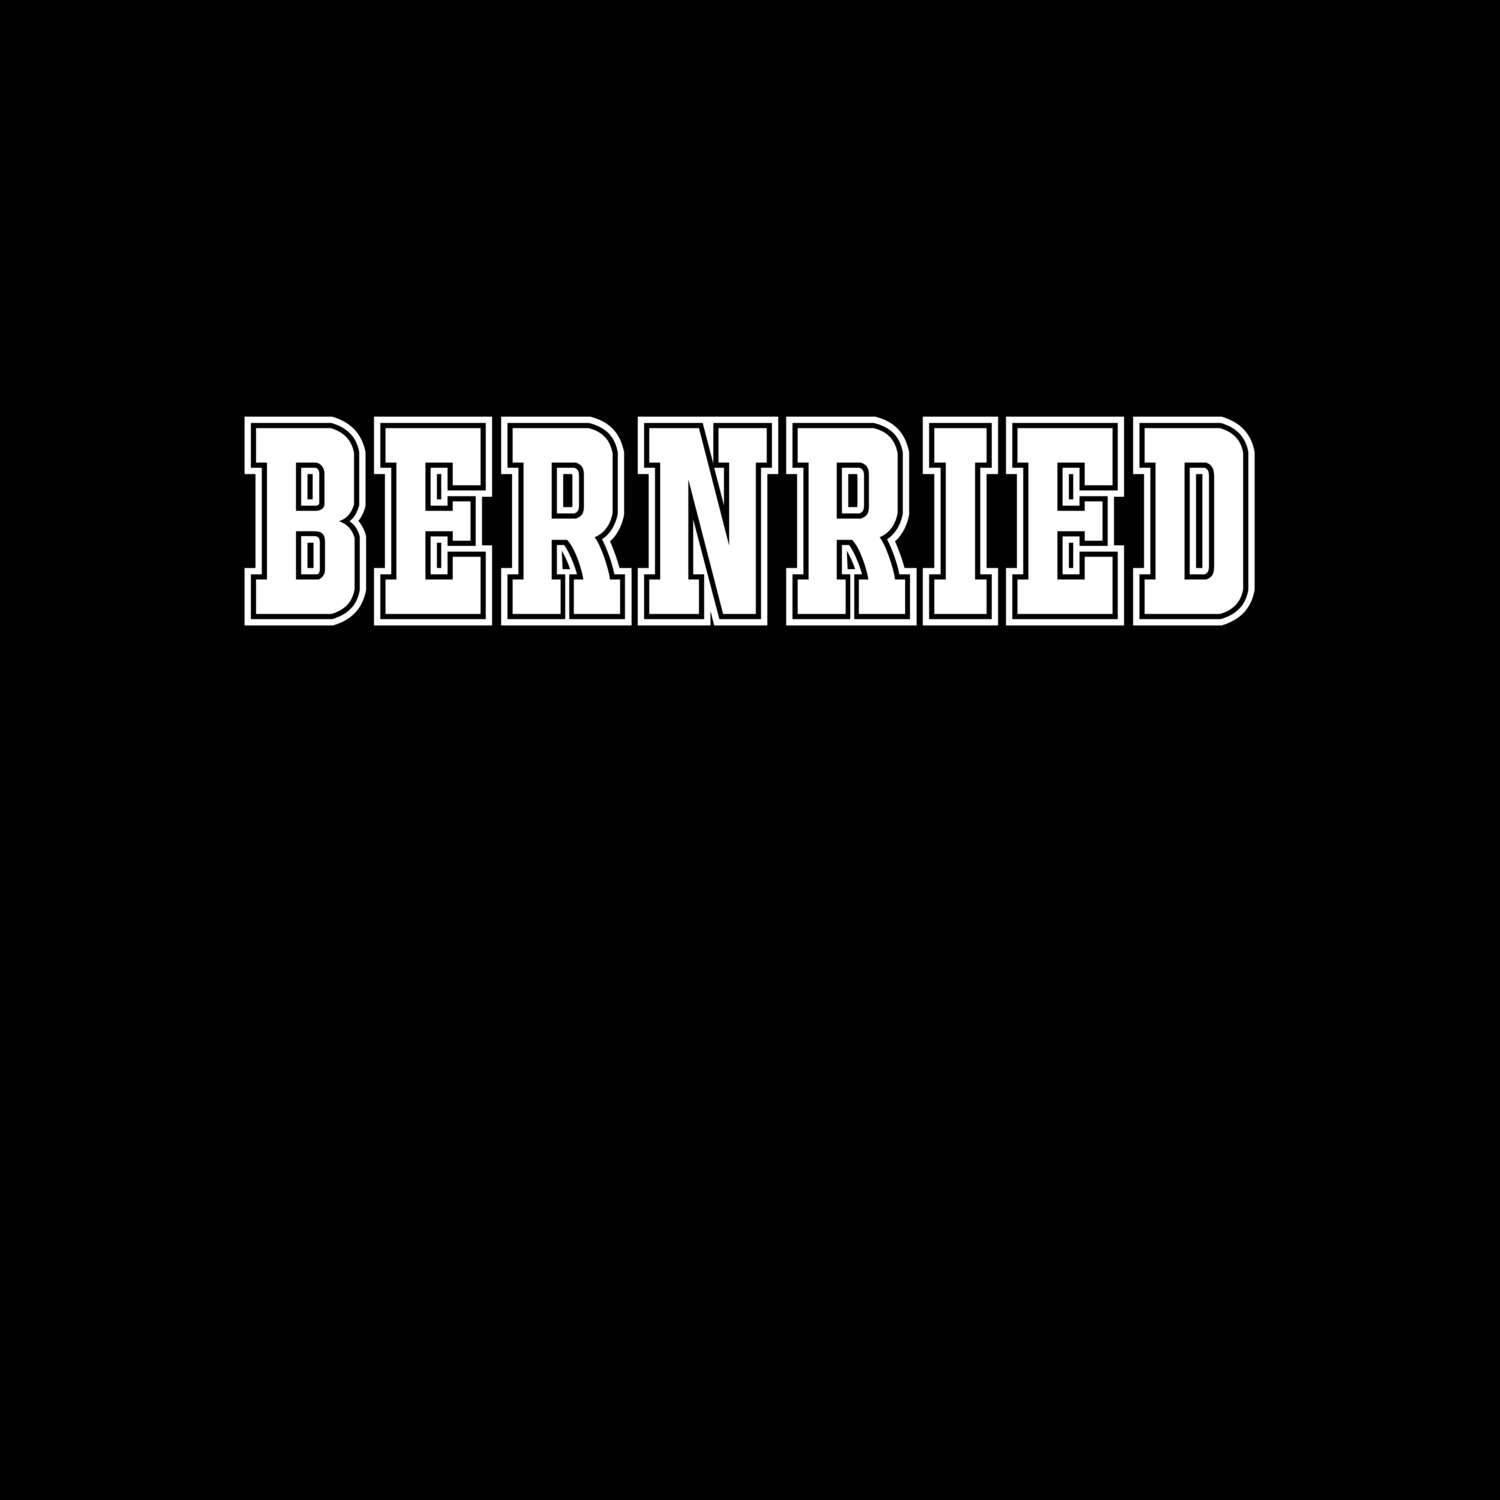 Bernried T-Shirt »Classic«